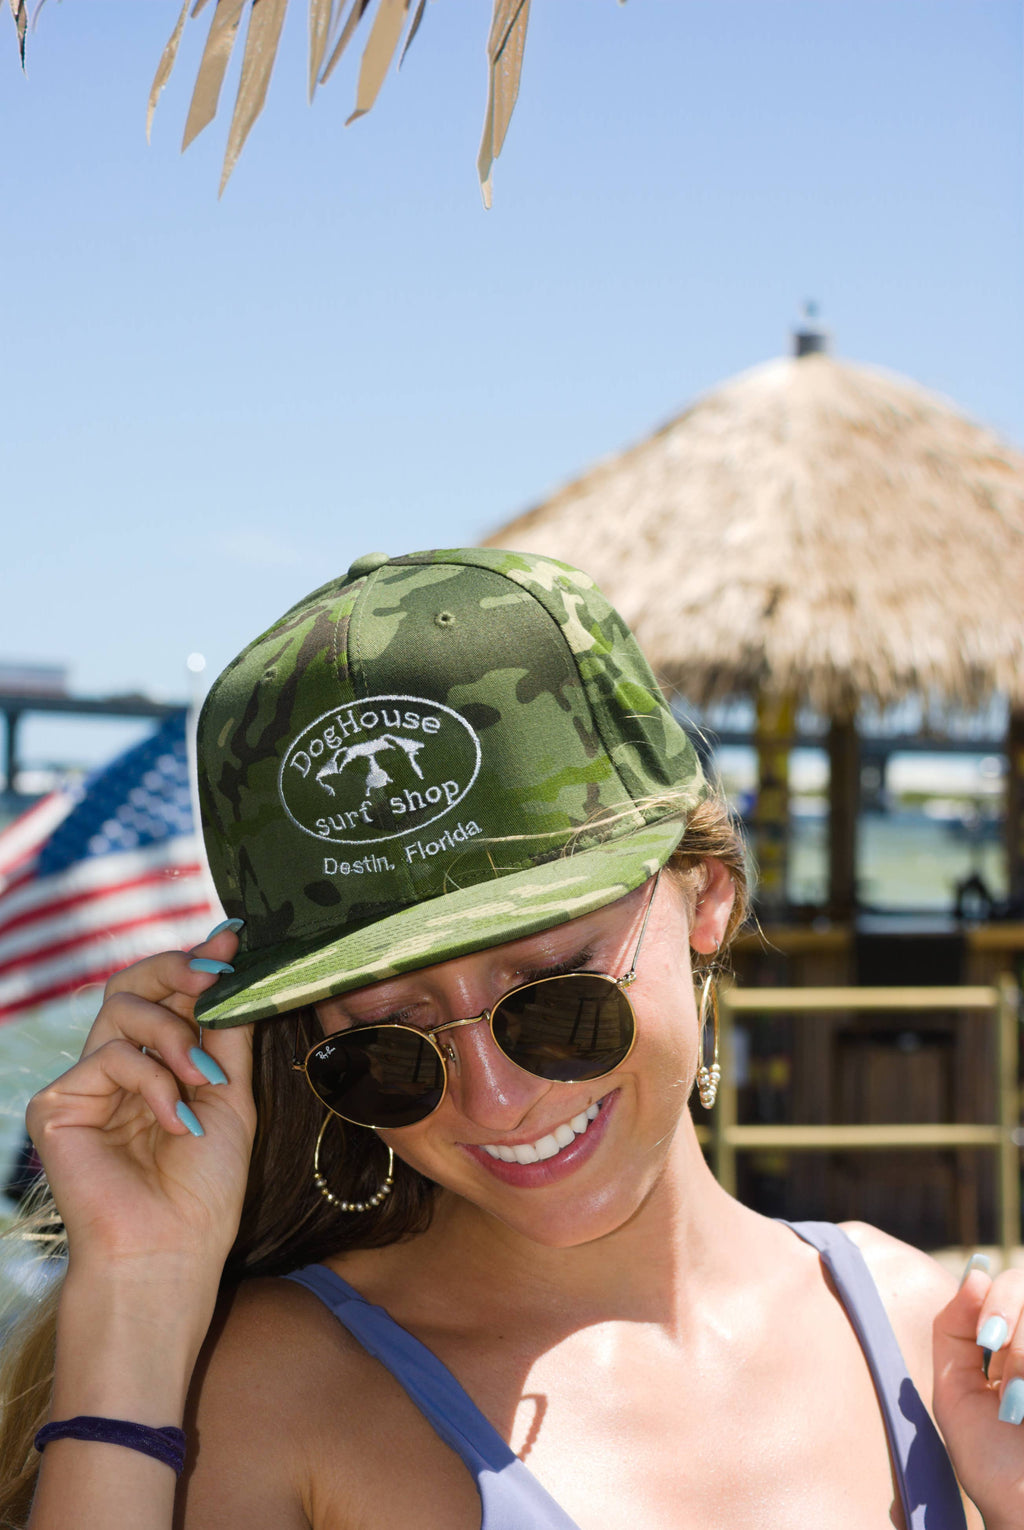 Flatbill Snapback Hat - Corduroy - International Mission Board Store